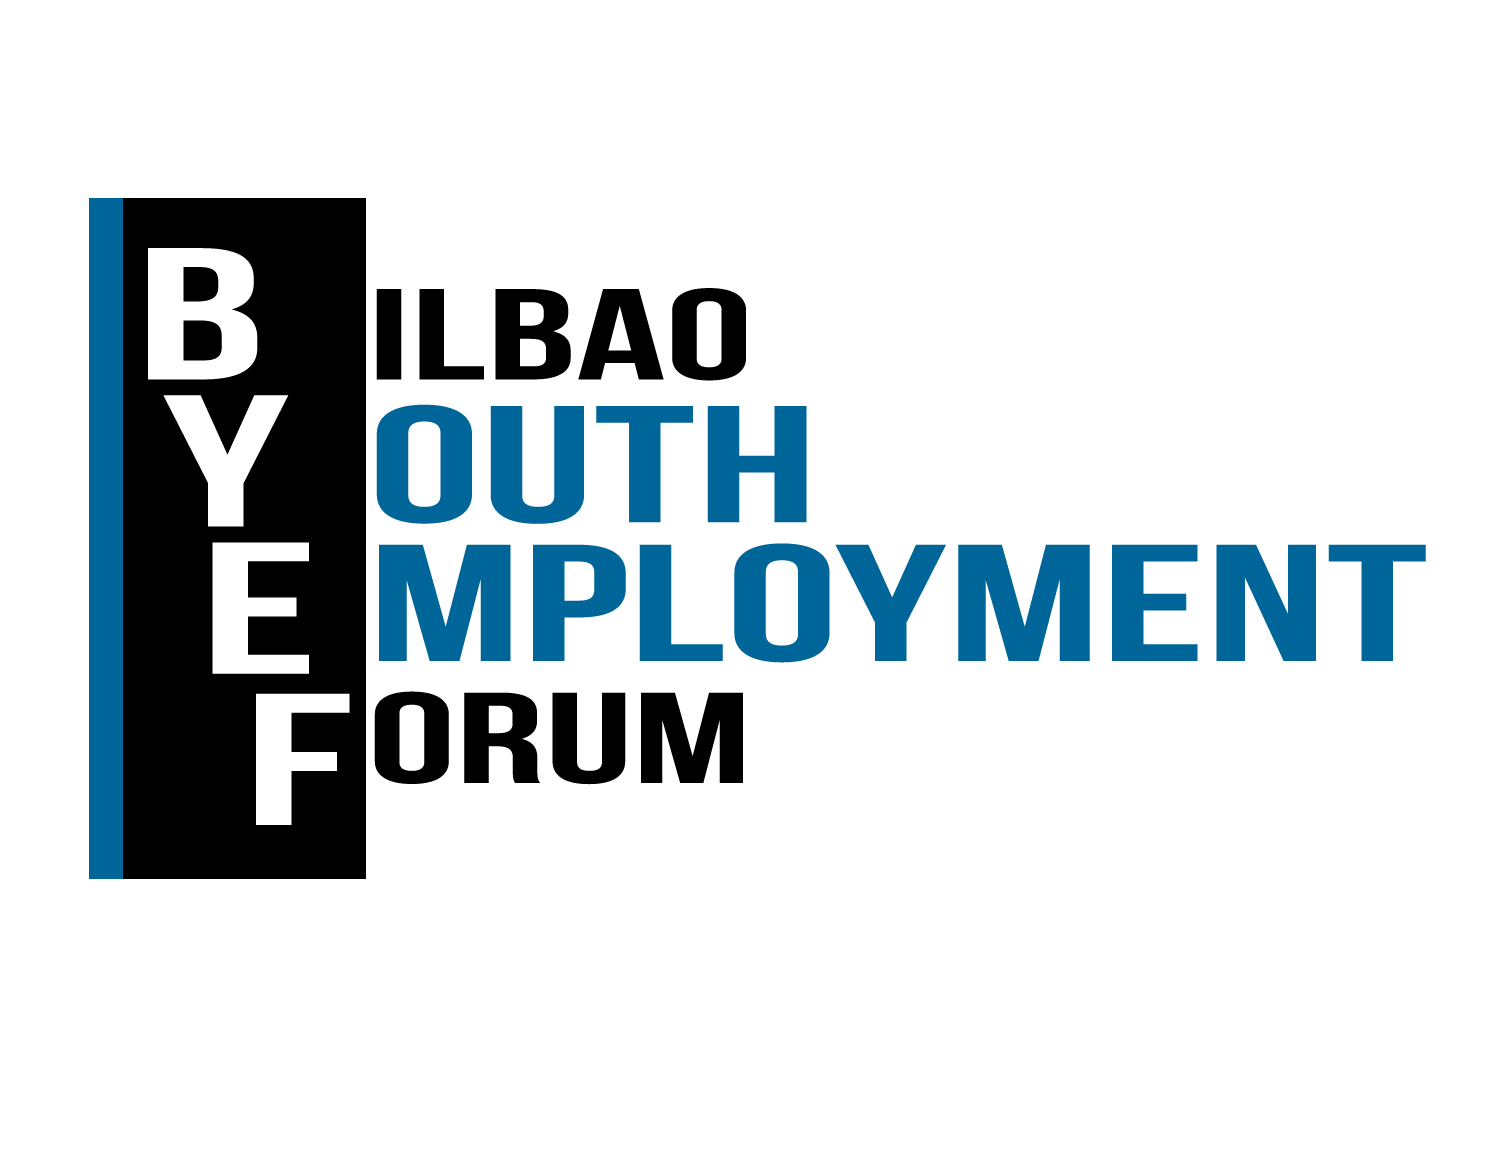 byef - Bilbao youth employment forum